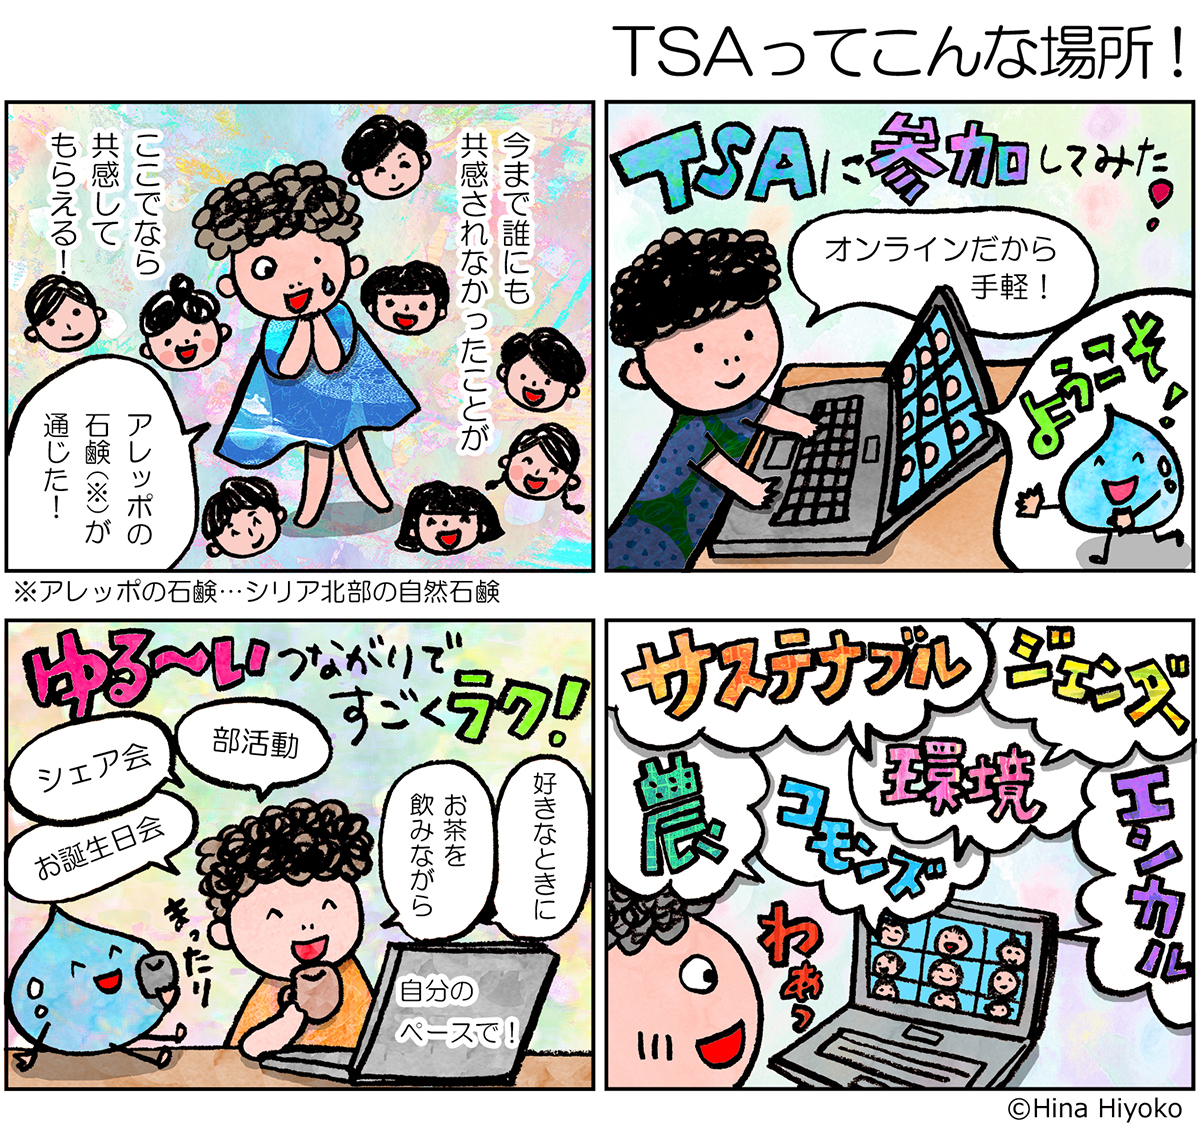 TSA_comic_01-sq_web.jpg